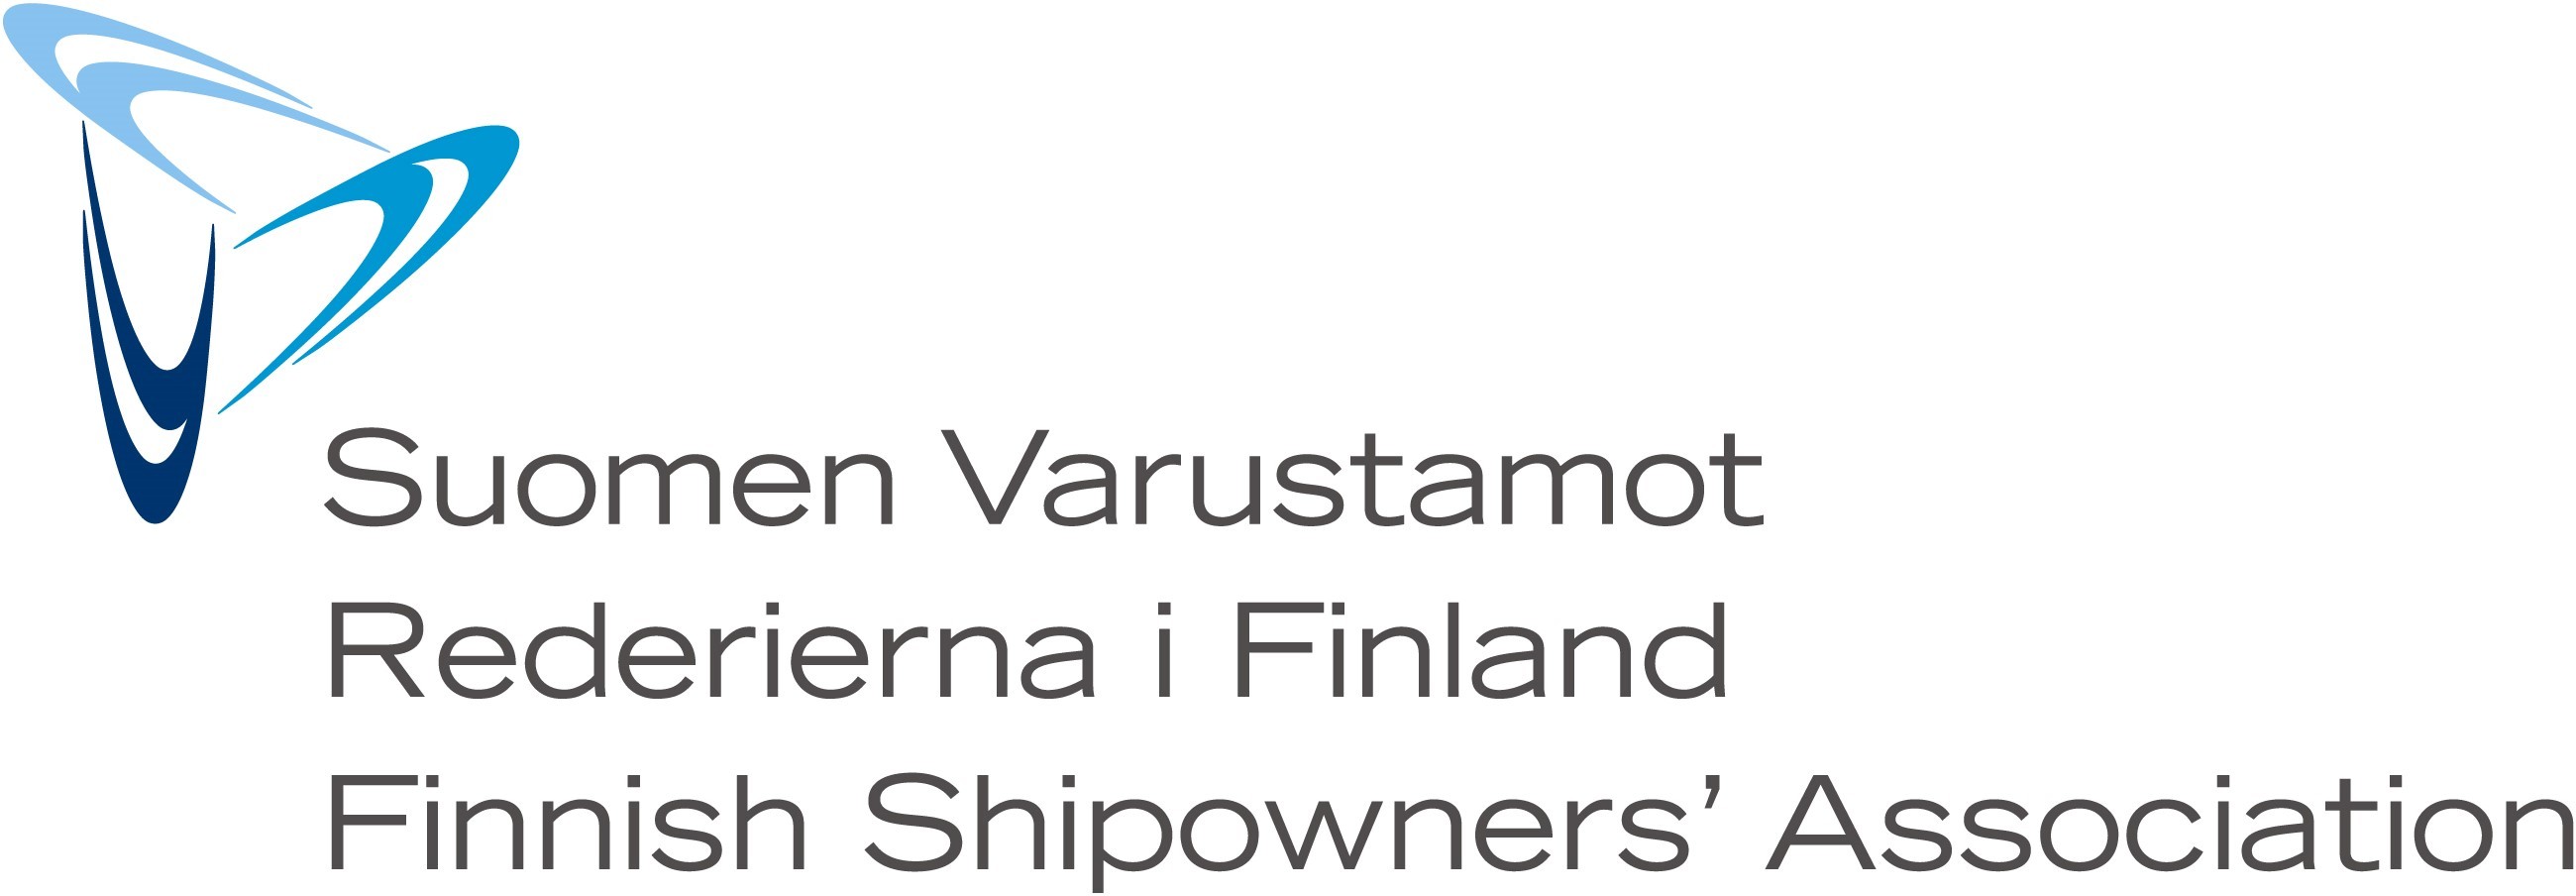 Finnish Shipowners’ Association